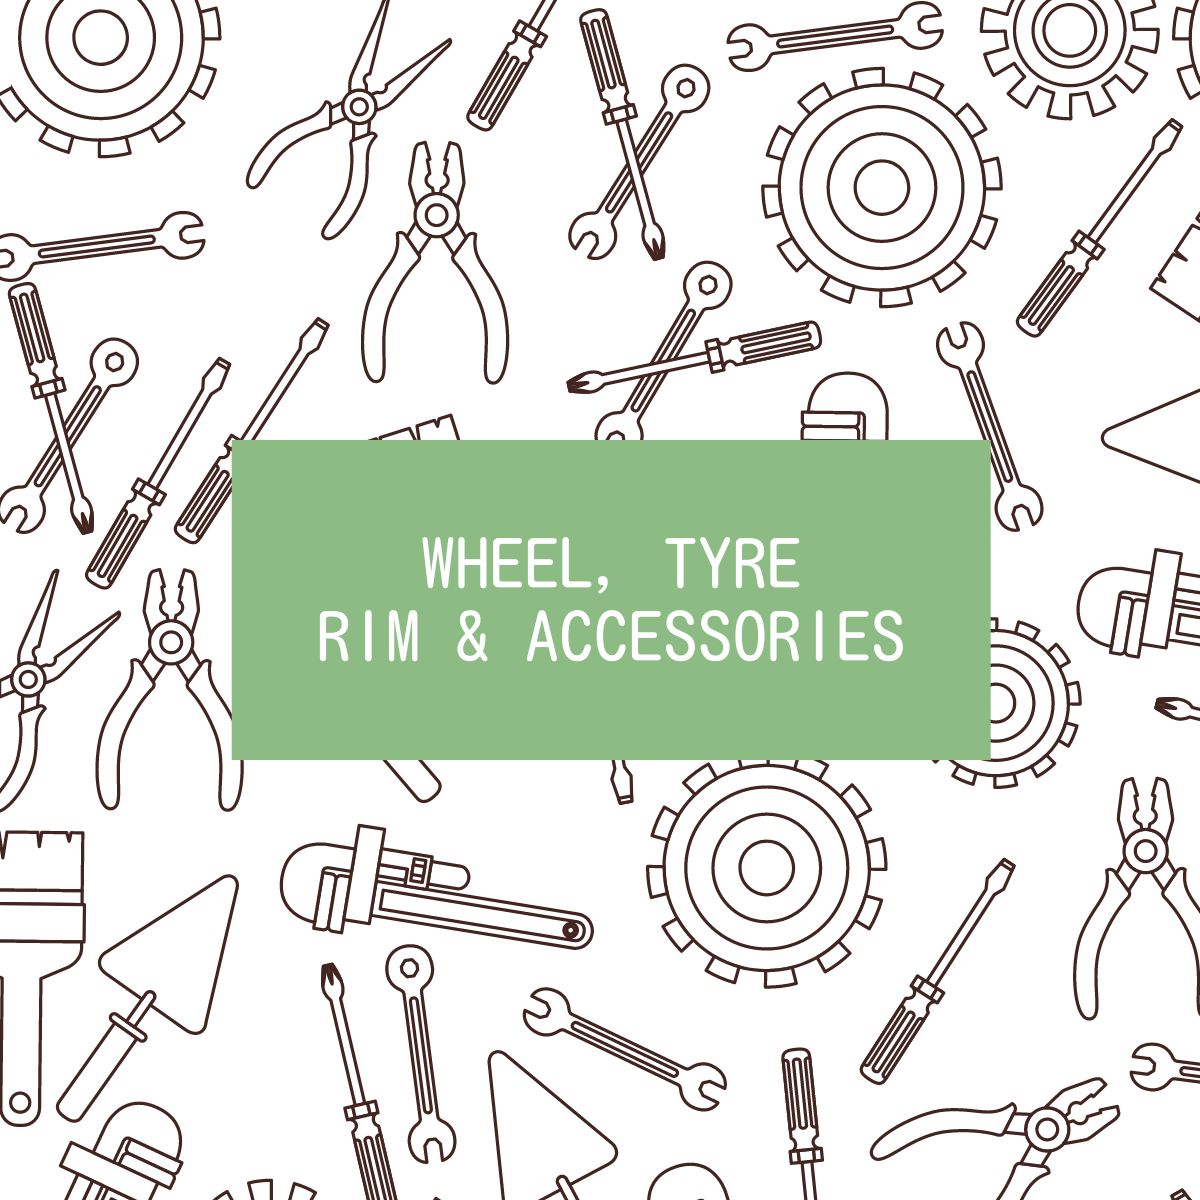 Wheel, Tyre Rim & Accessories